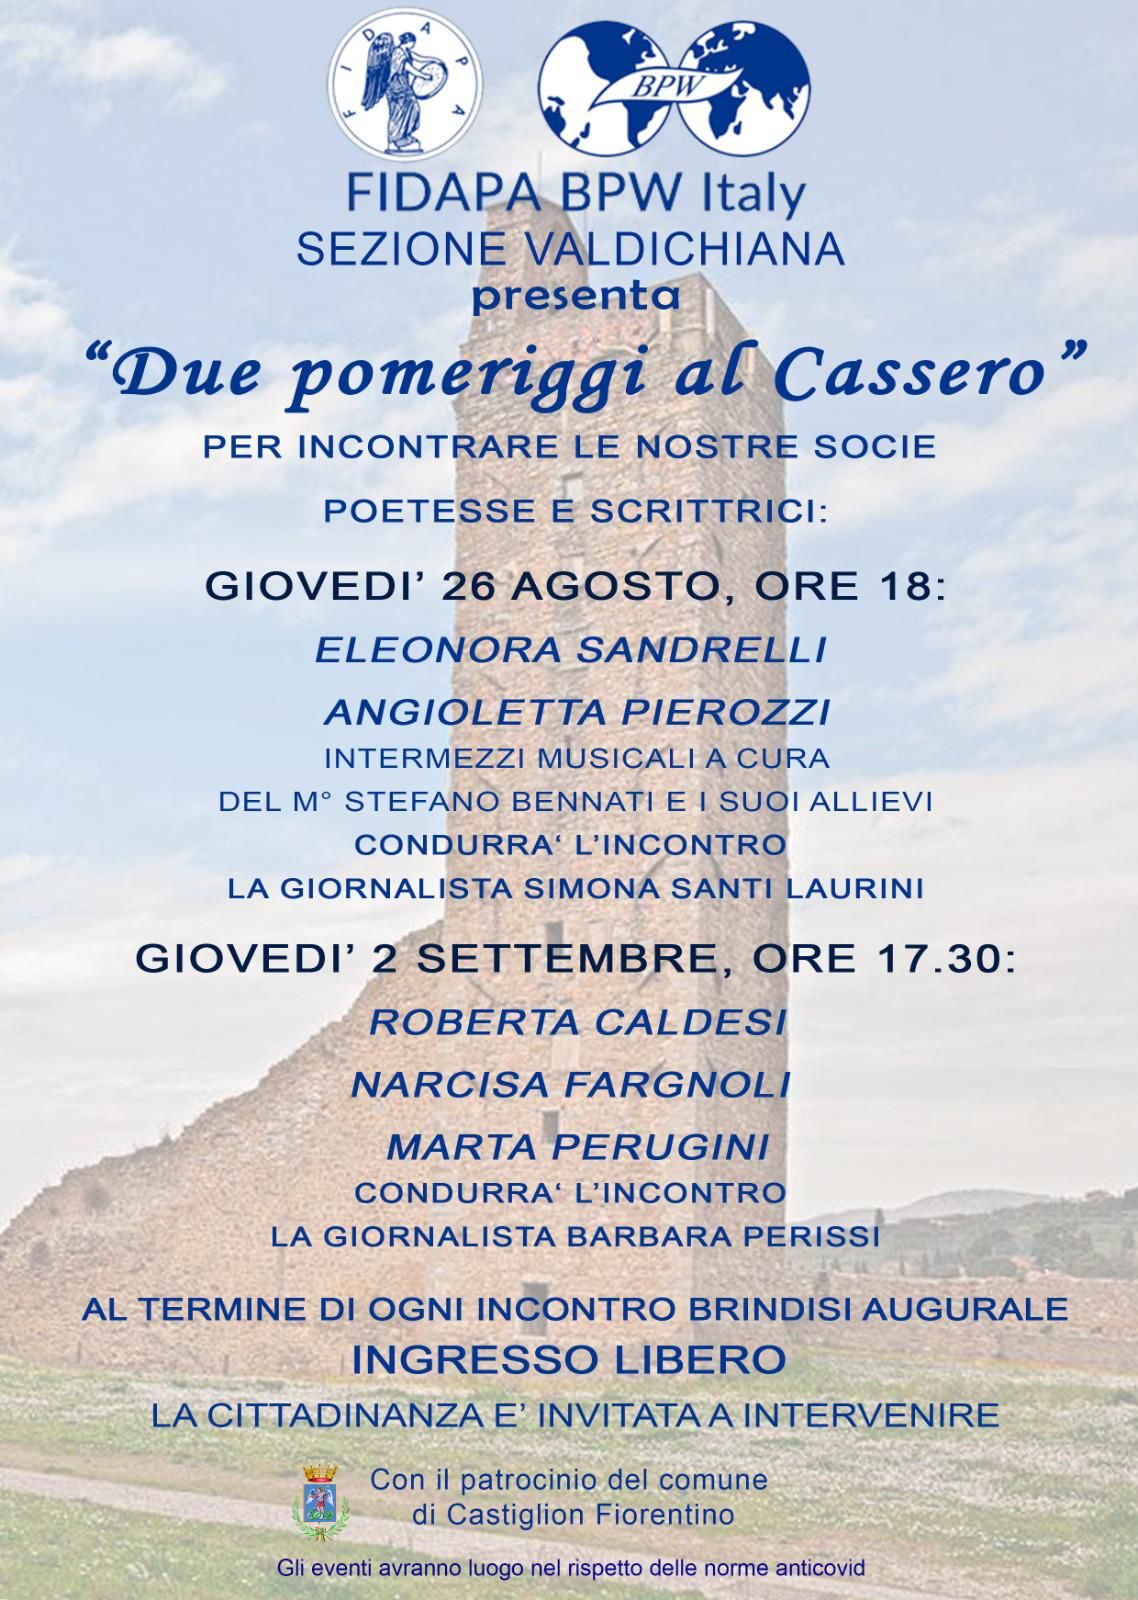 La Fidapa BPW ITALY Valdichiana organizza due pomeriggi dedicati al libro